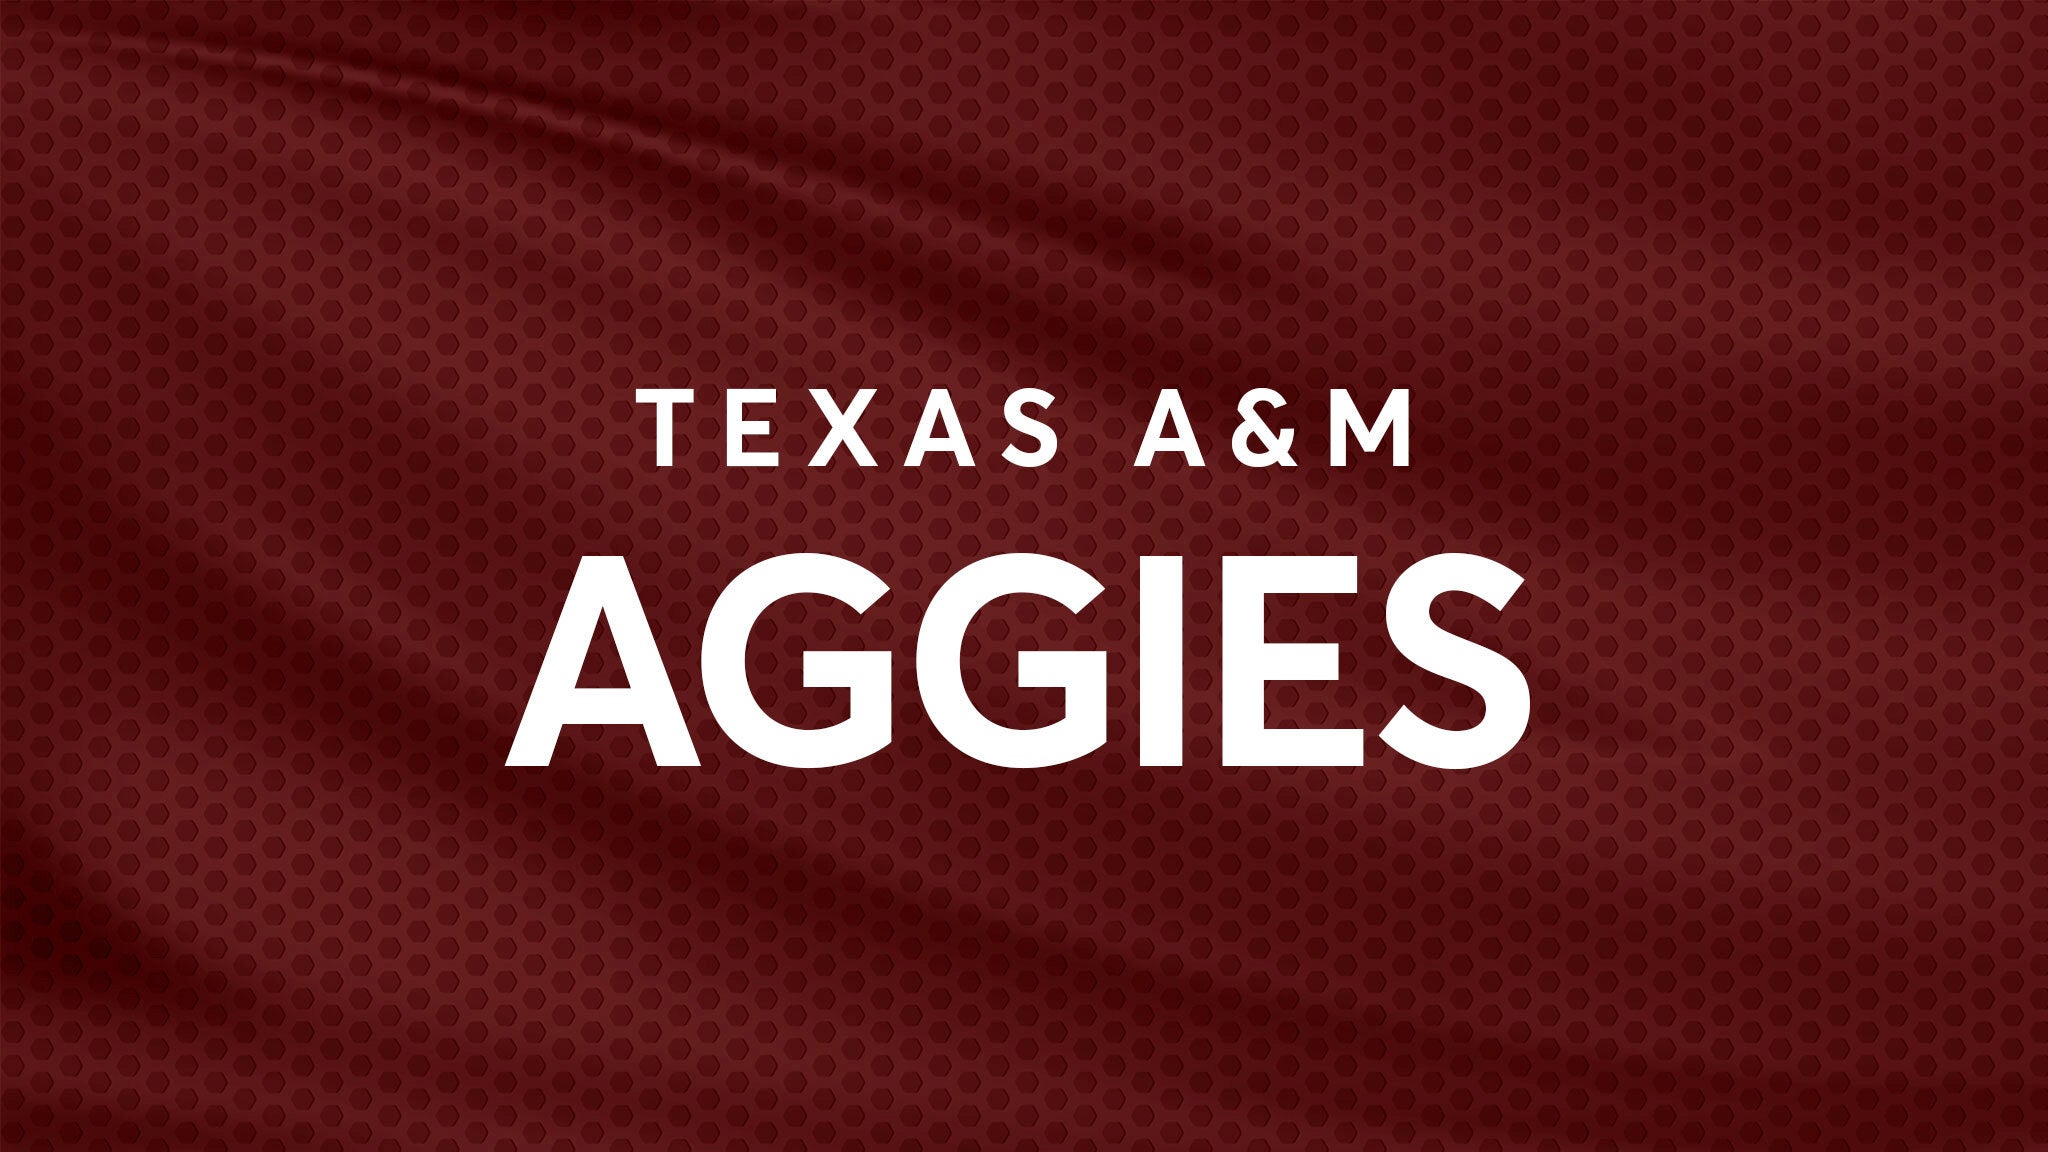 Texas A&M Aggies Baseball vs. Tarleton State Baseball